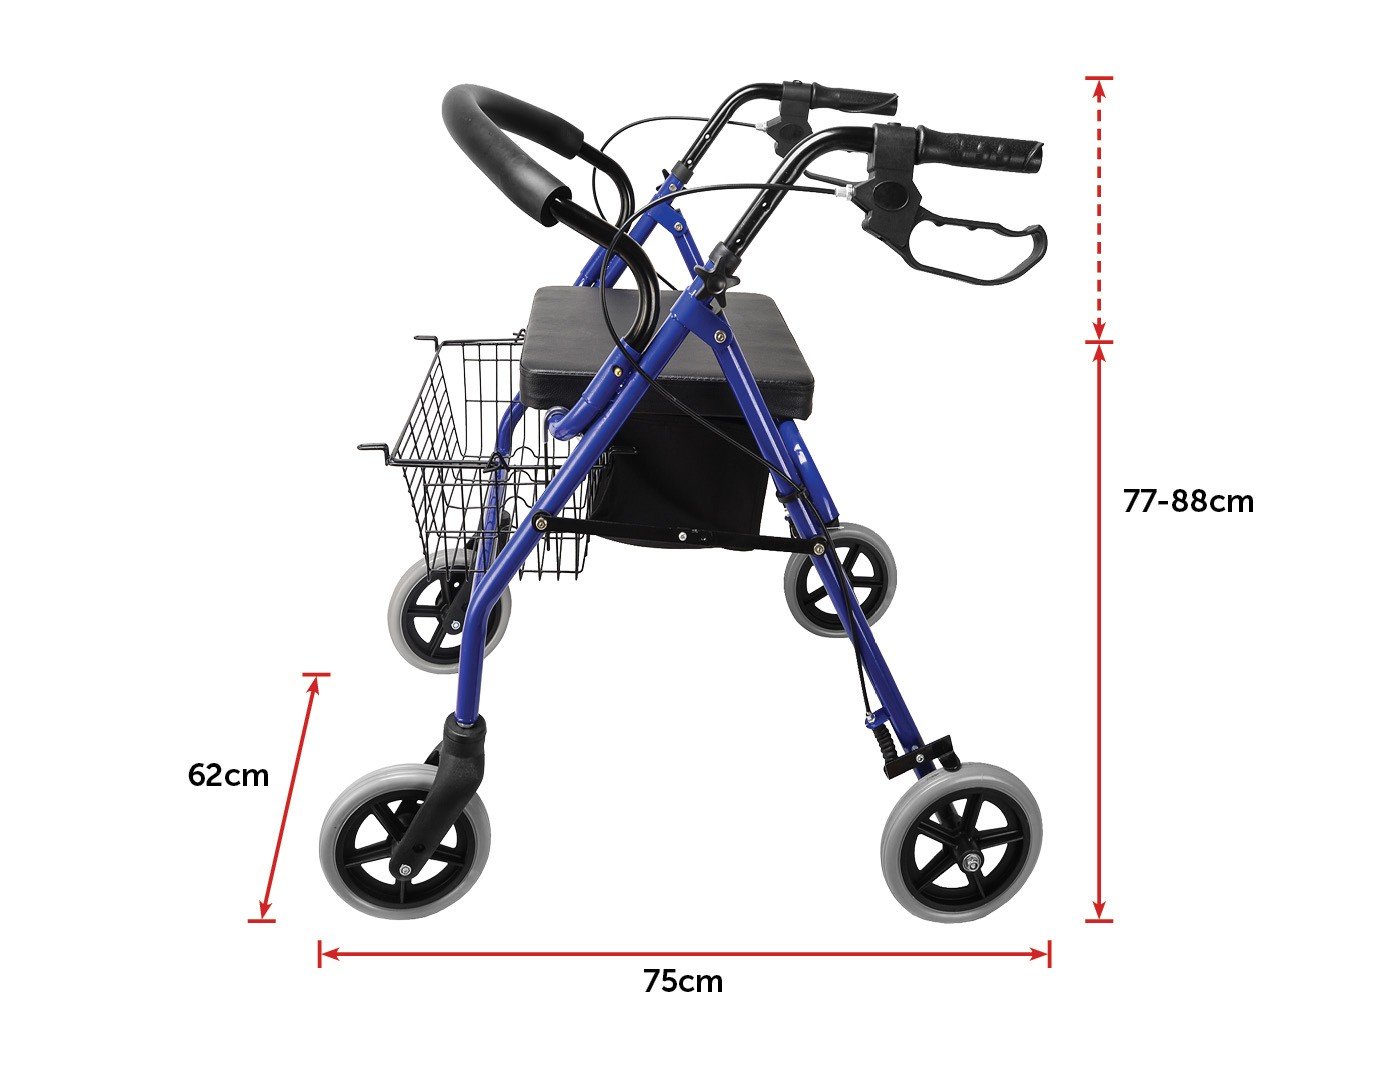 Personal Care Rollator Walker Walking Frame With Wheels Blue